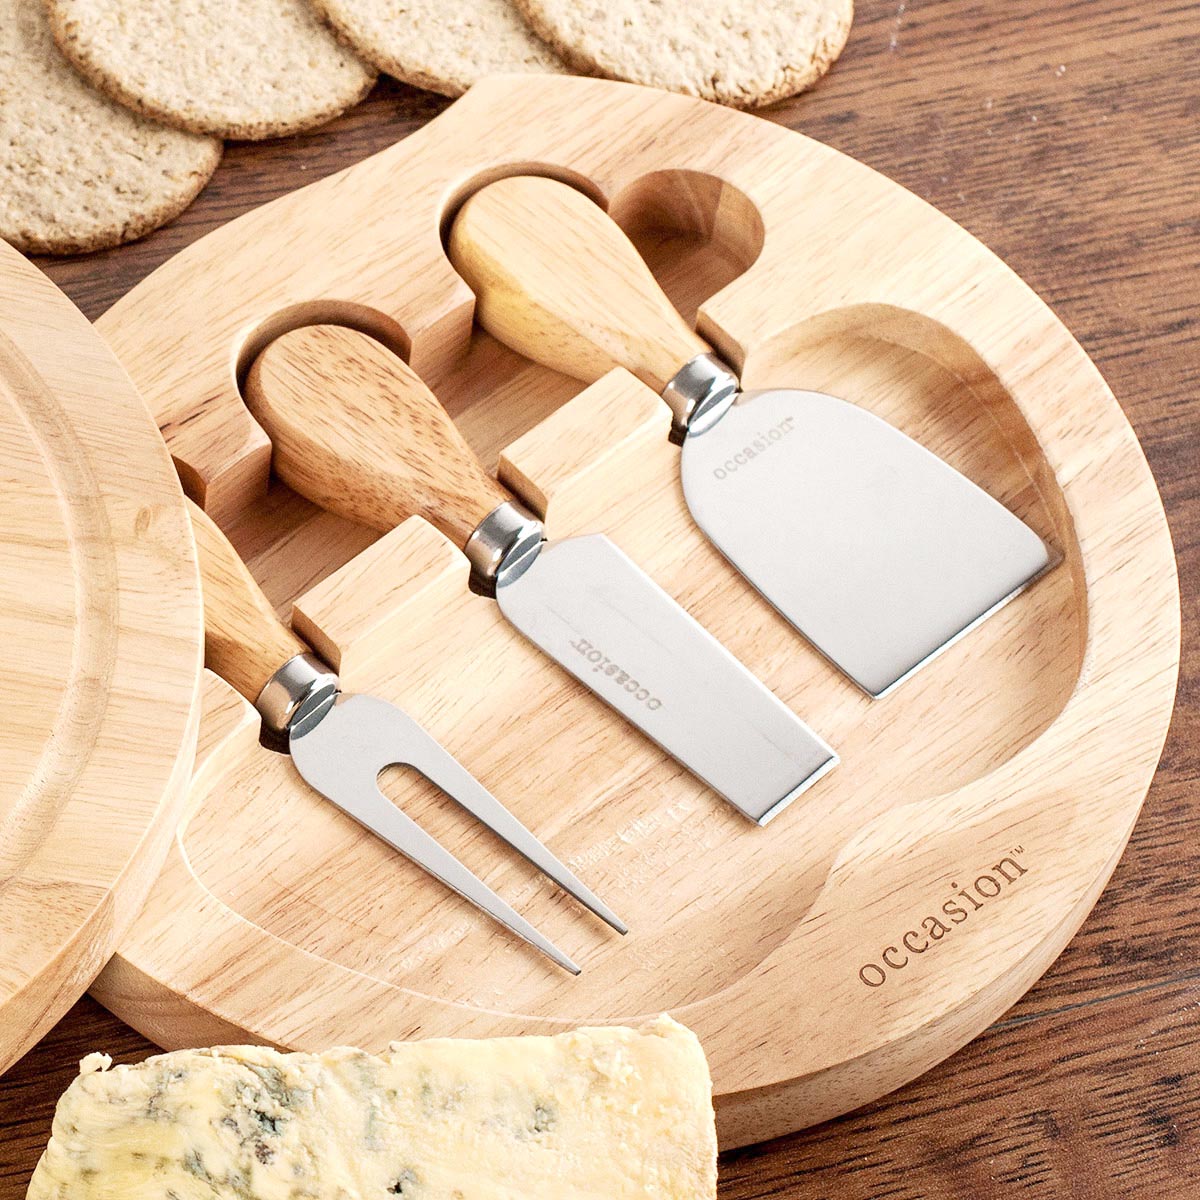 Personalised Wooden Cheeseboard Set - Cheese Lovers